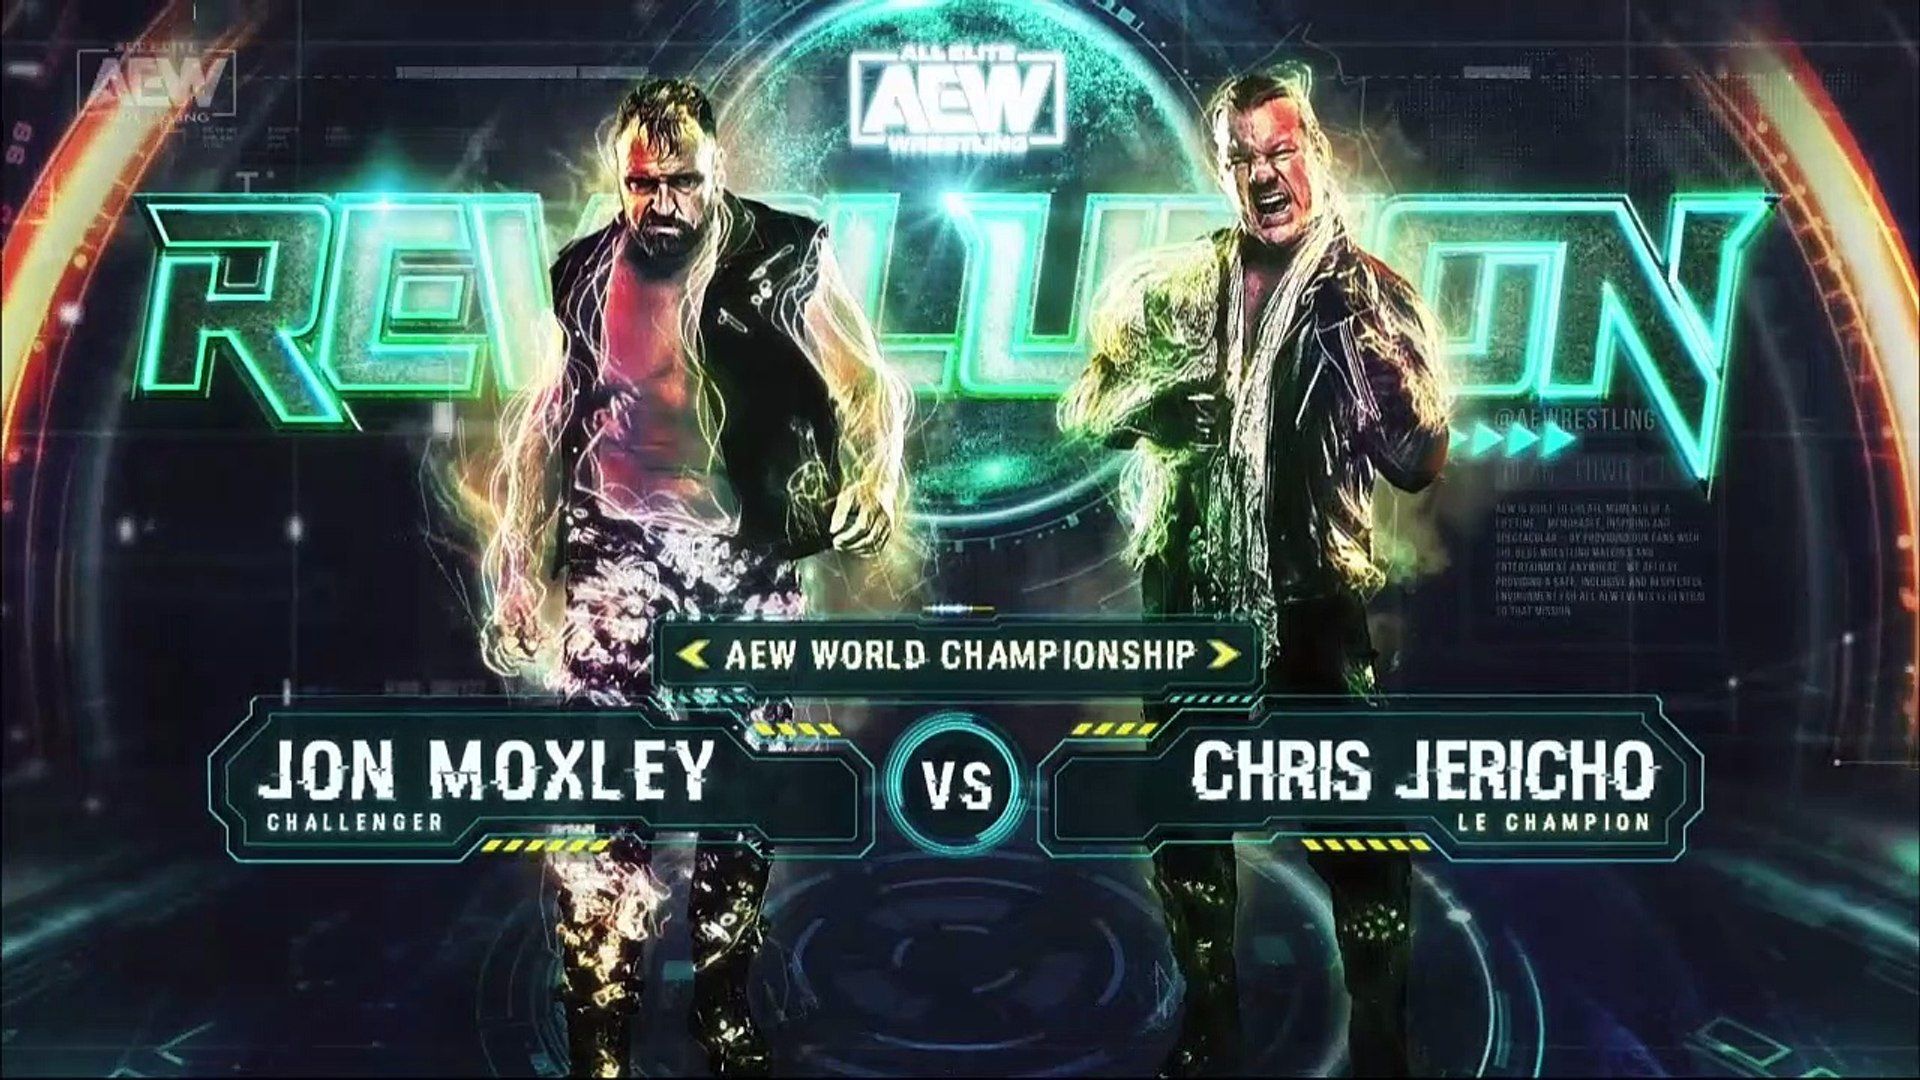 Jon Moxley vs. Chris Jericho